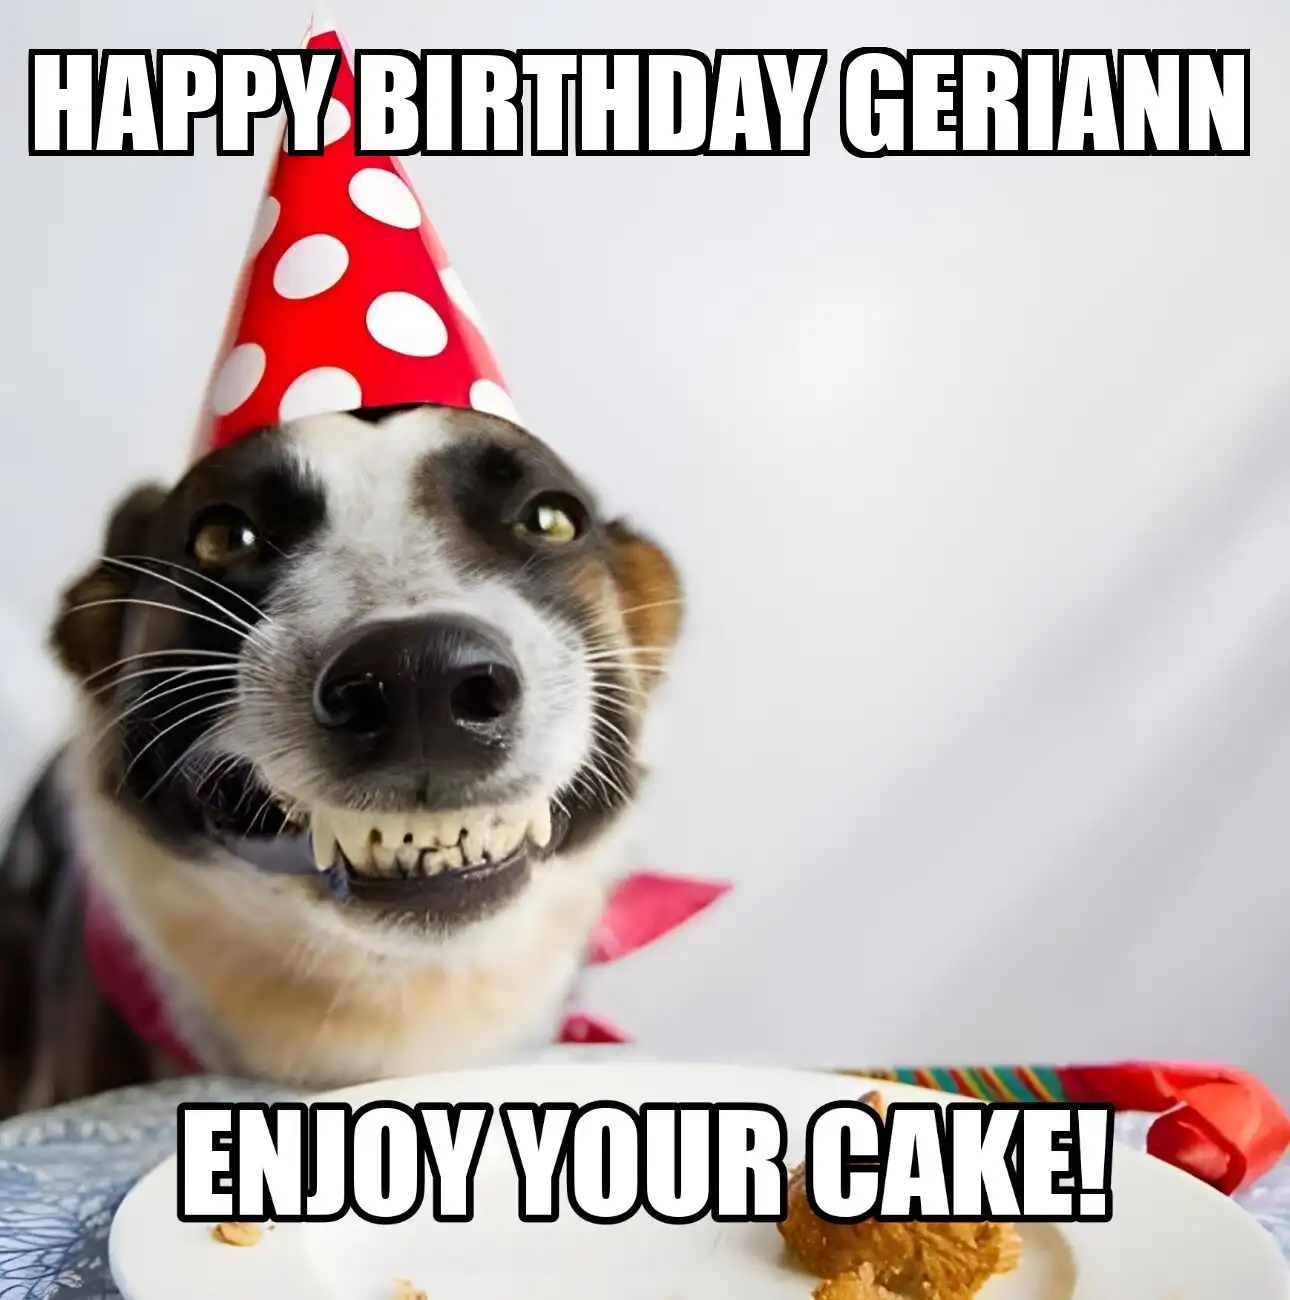 Happy Birthday Geriann Enjoy Your Cake Dog Meme